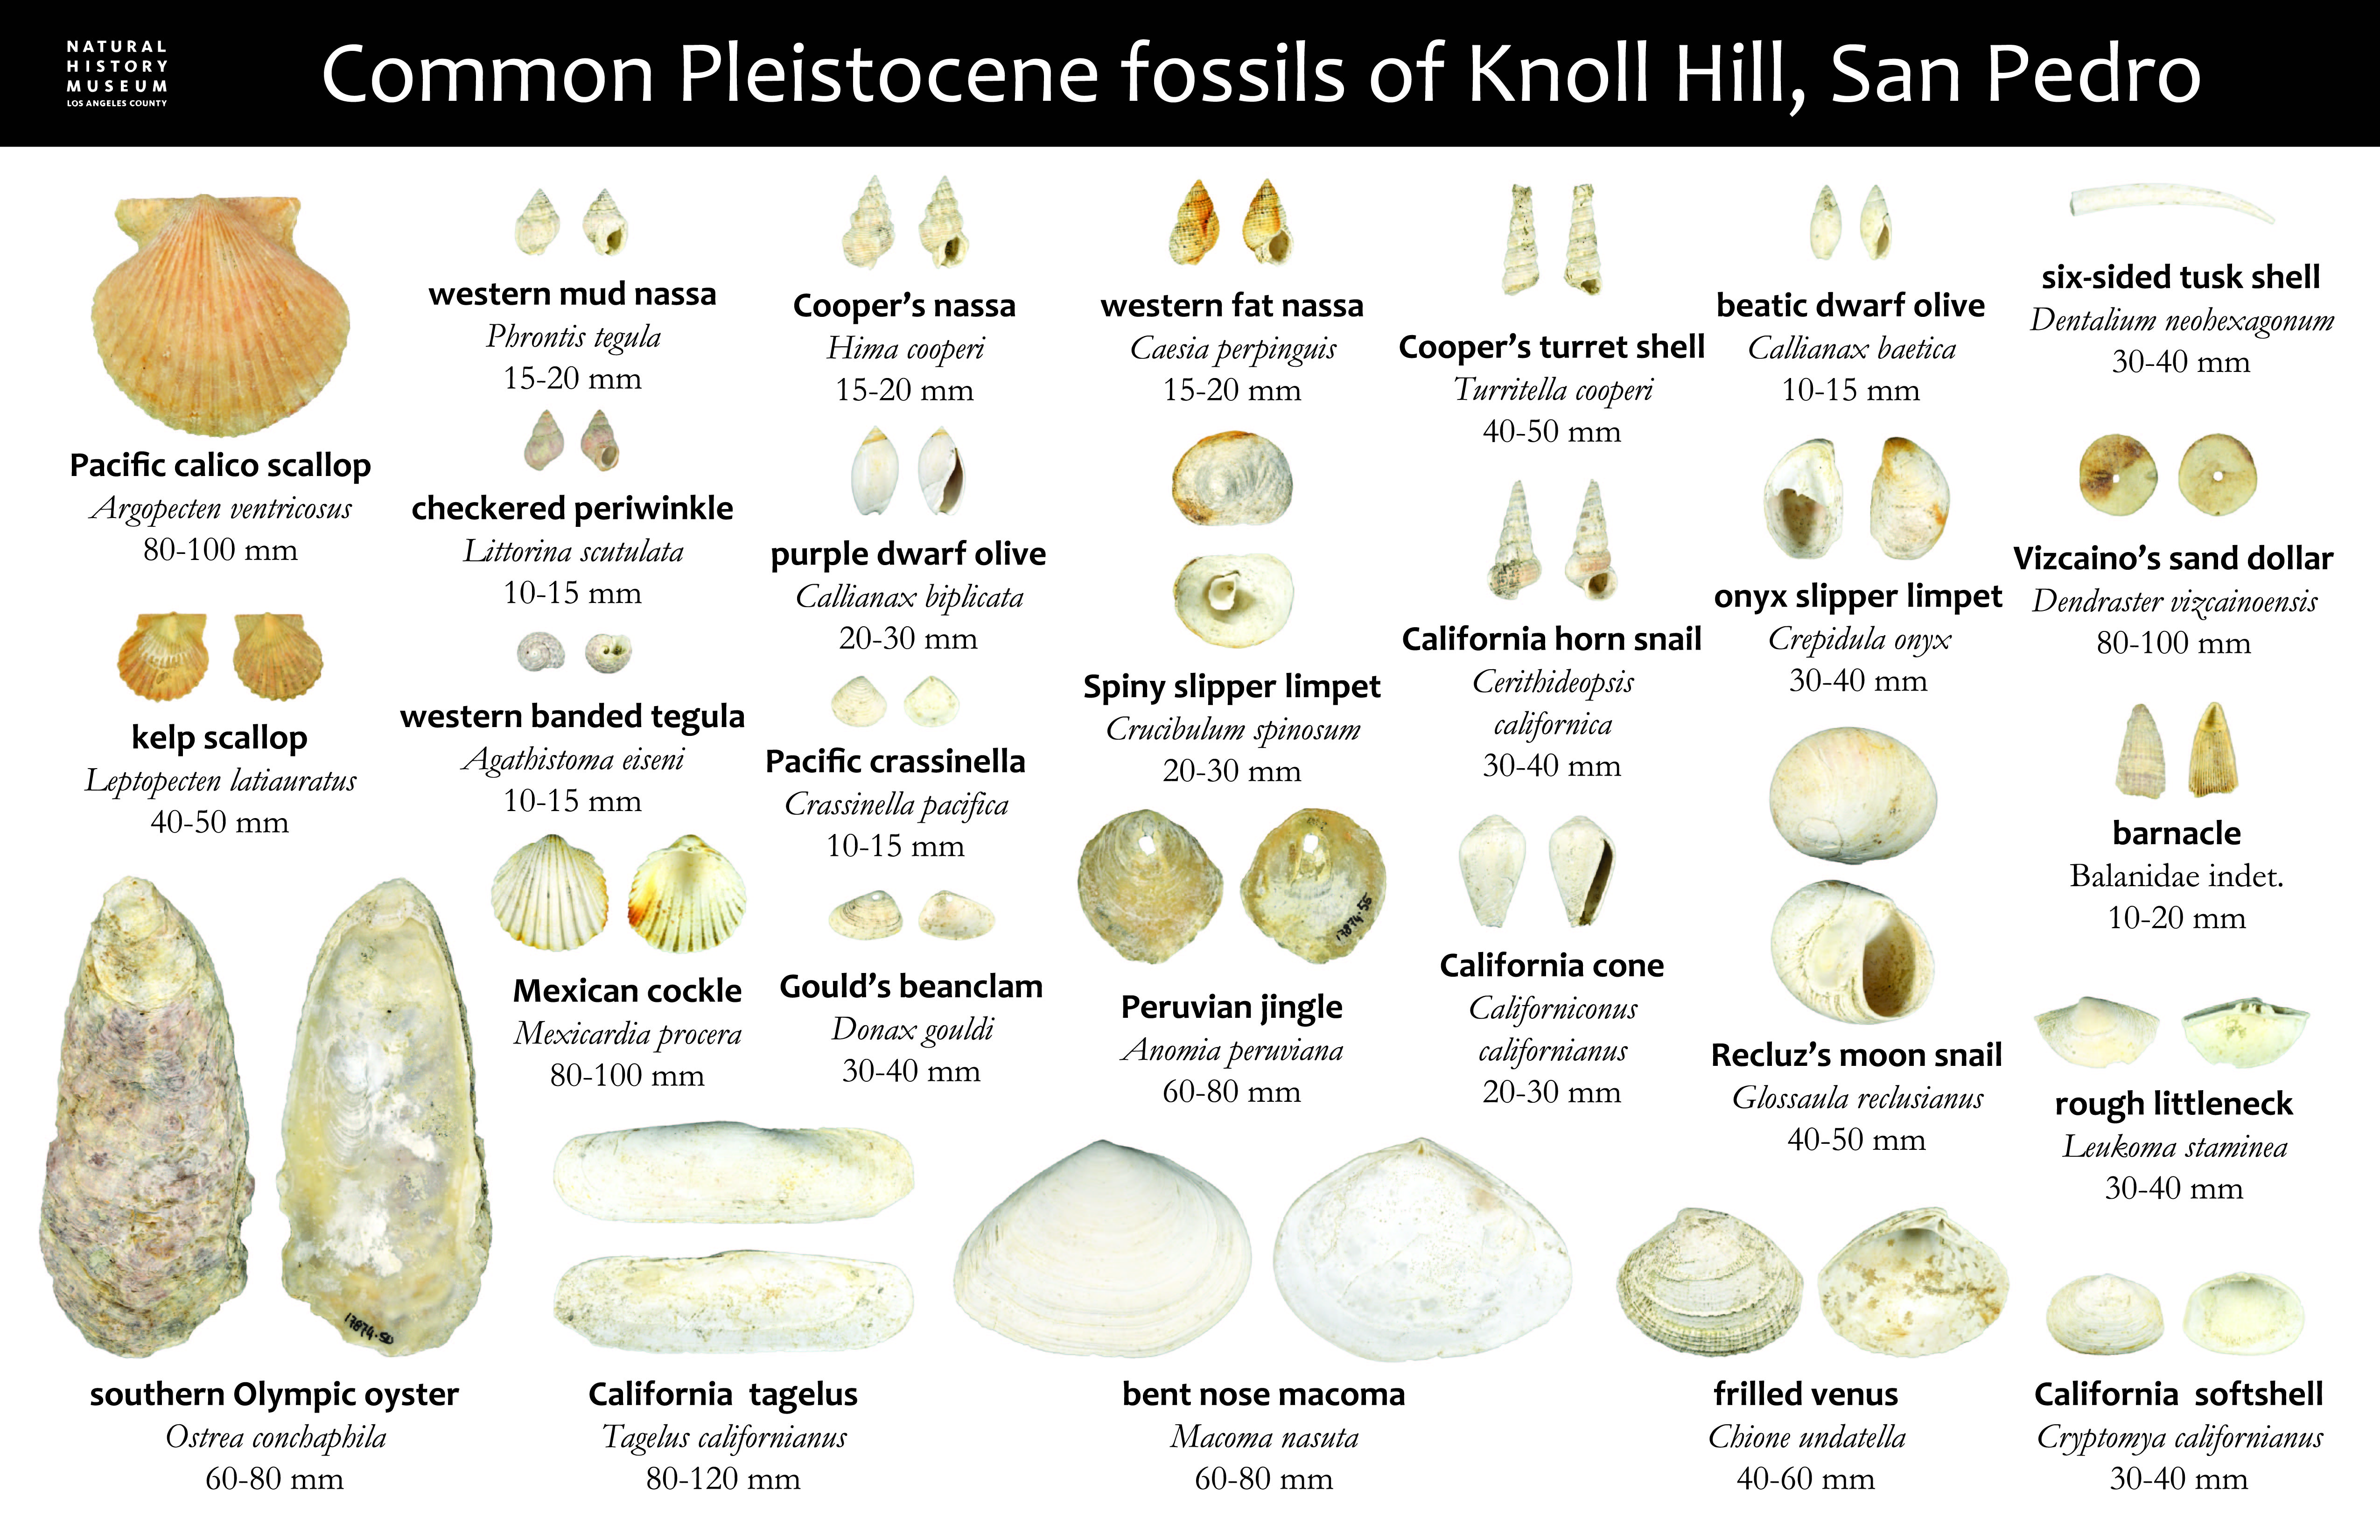 Resources | Invertebrate Paleontology @ NHM